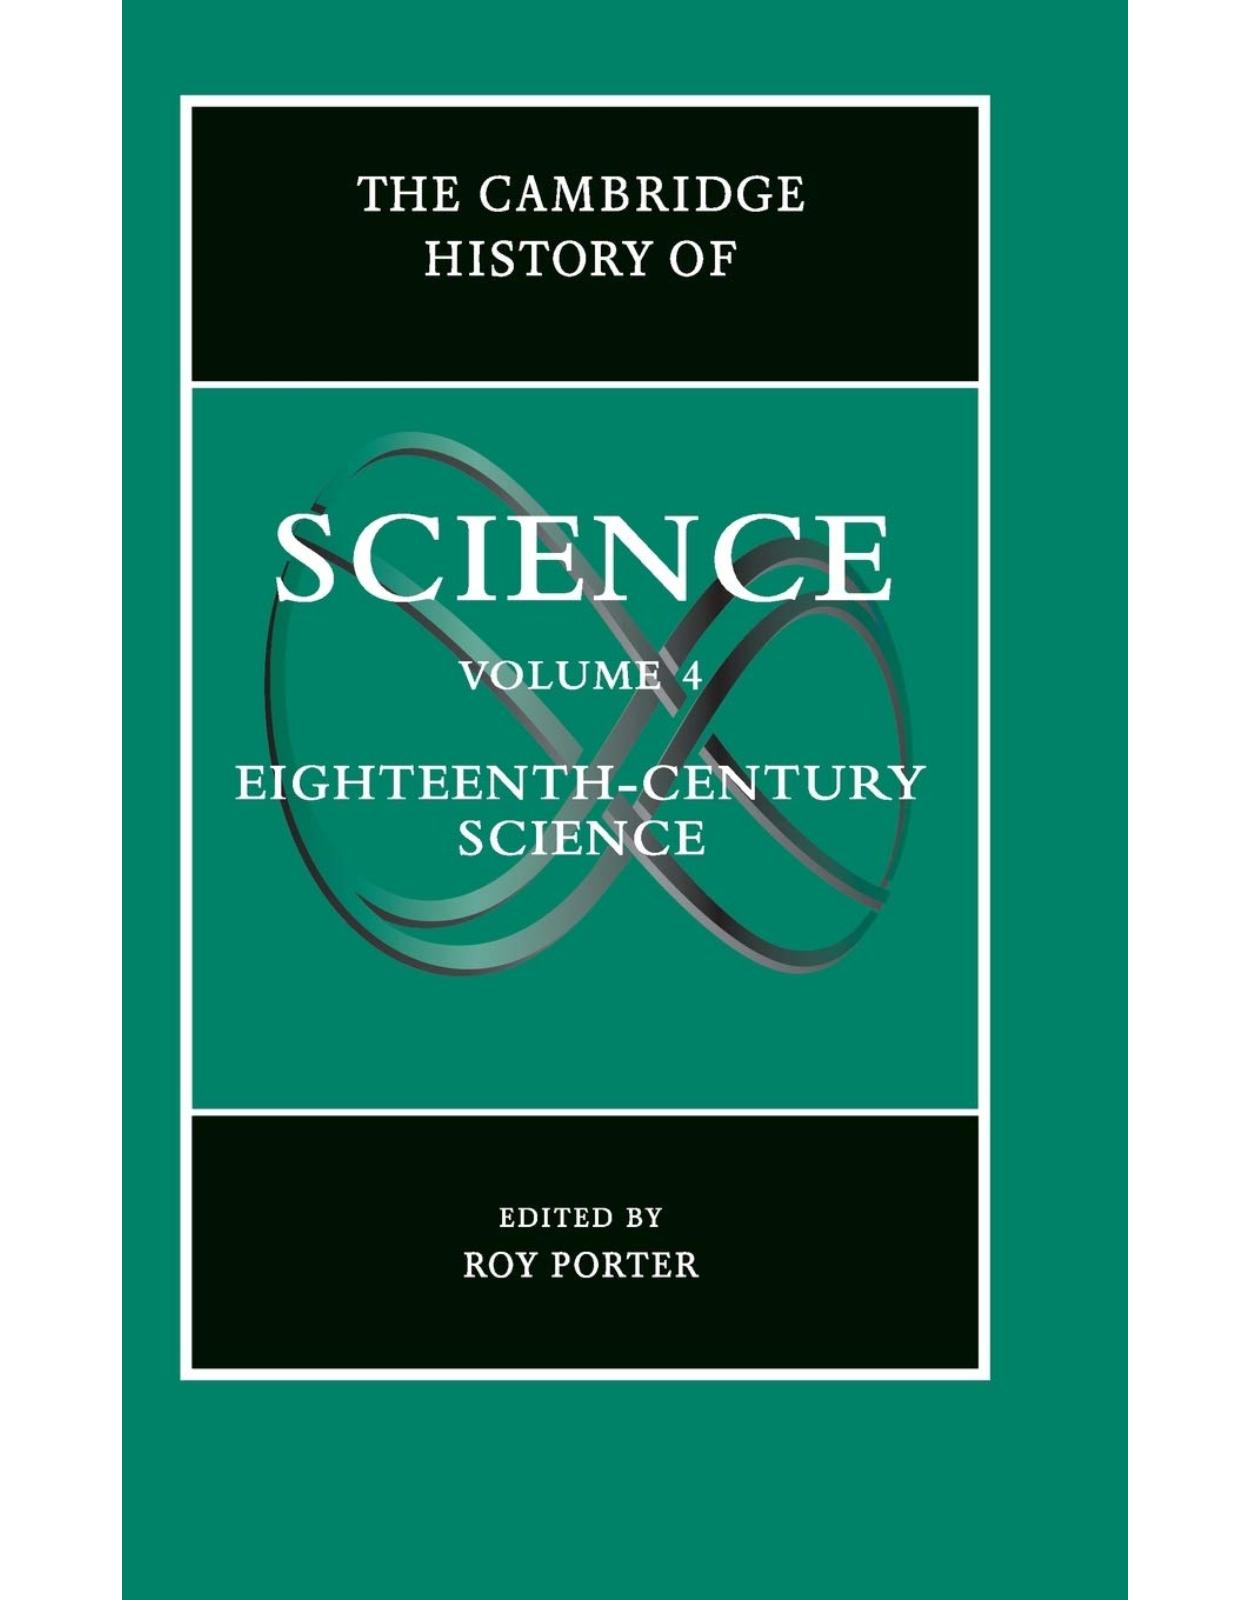 The Cambridge History of Science: Volume 4, Eighteenth-Century Science: Eighteenth-century Science Vol 4